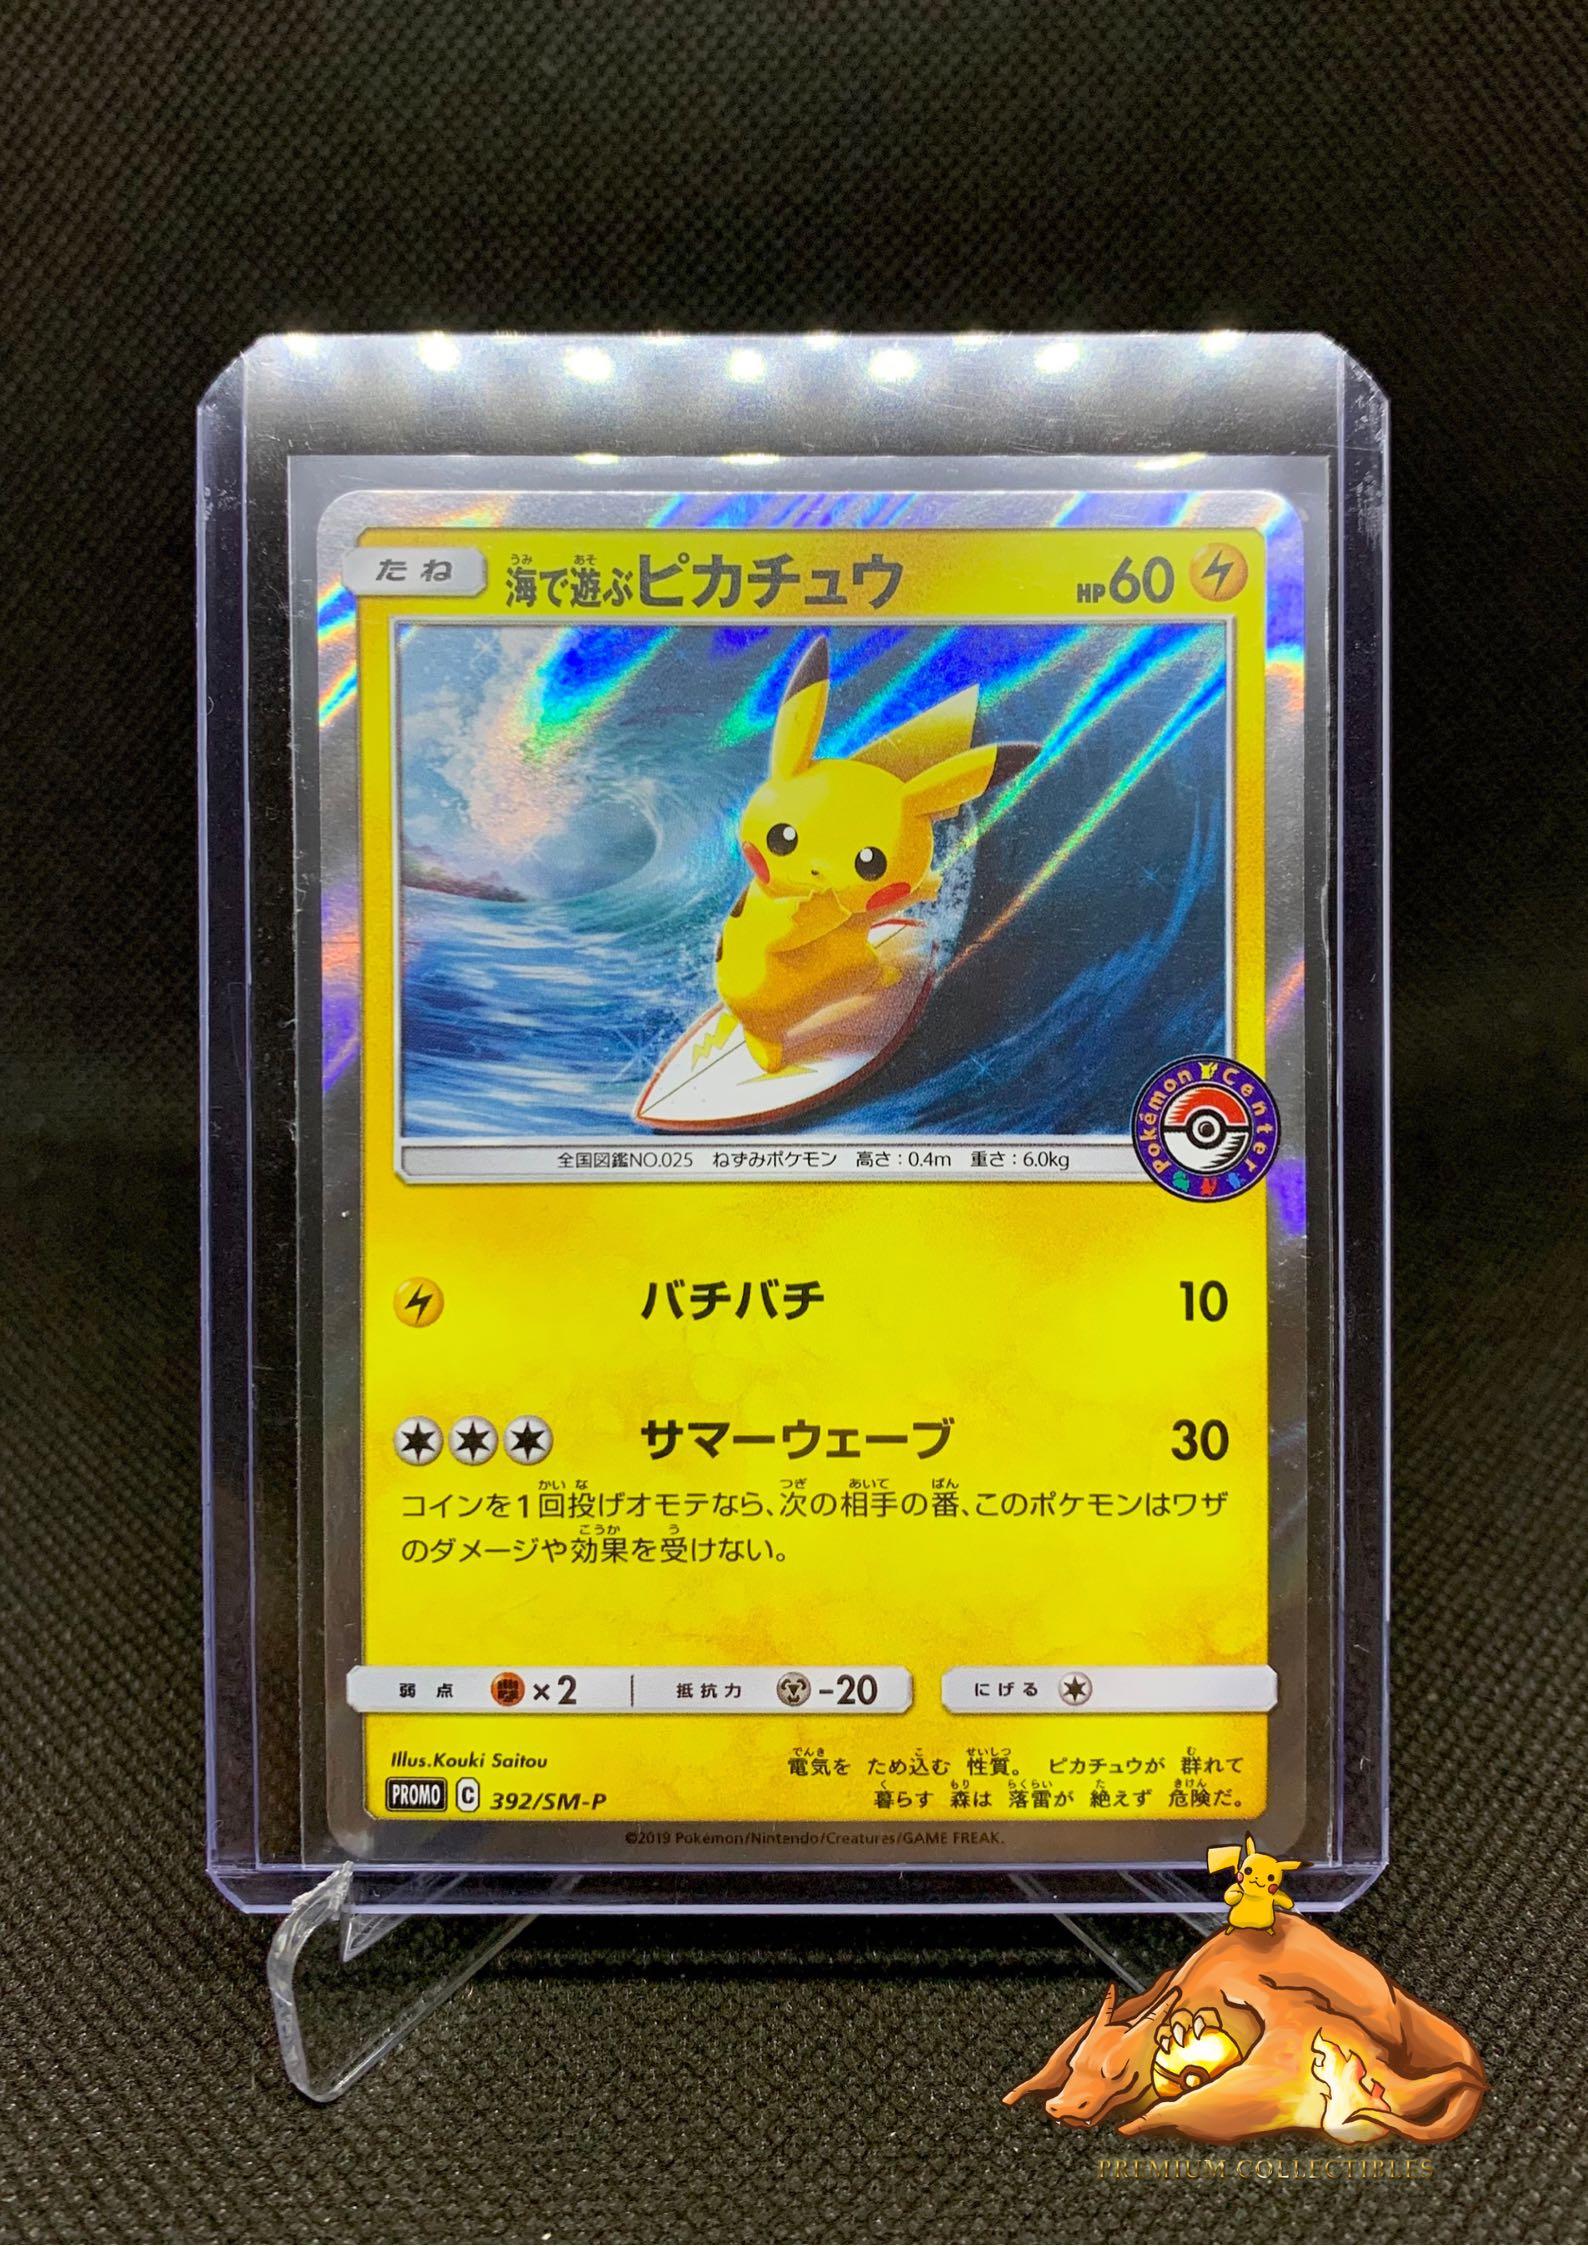 Toys Hobbies Pokemon Individual Cards Surfing Pikachu Holo Promo 392 Sm P Pokemon Center Japanese Nearmint Mint